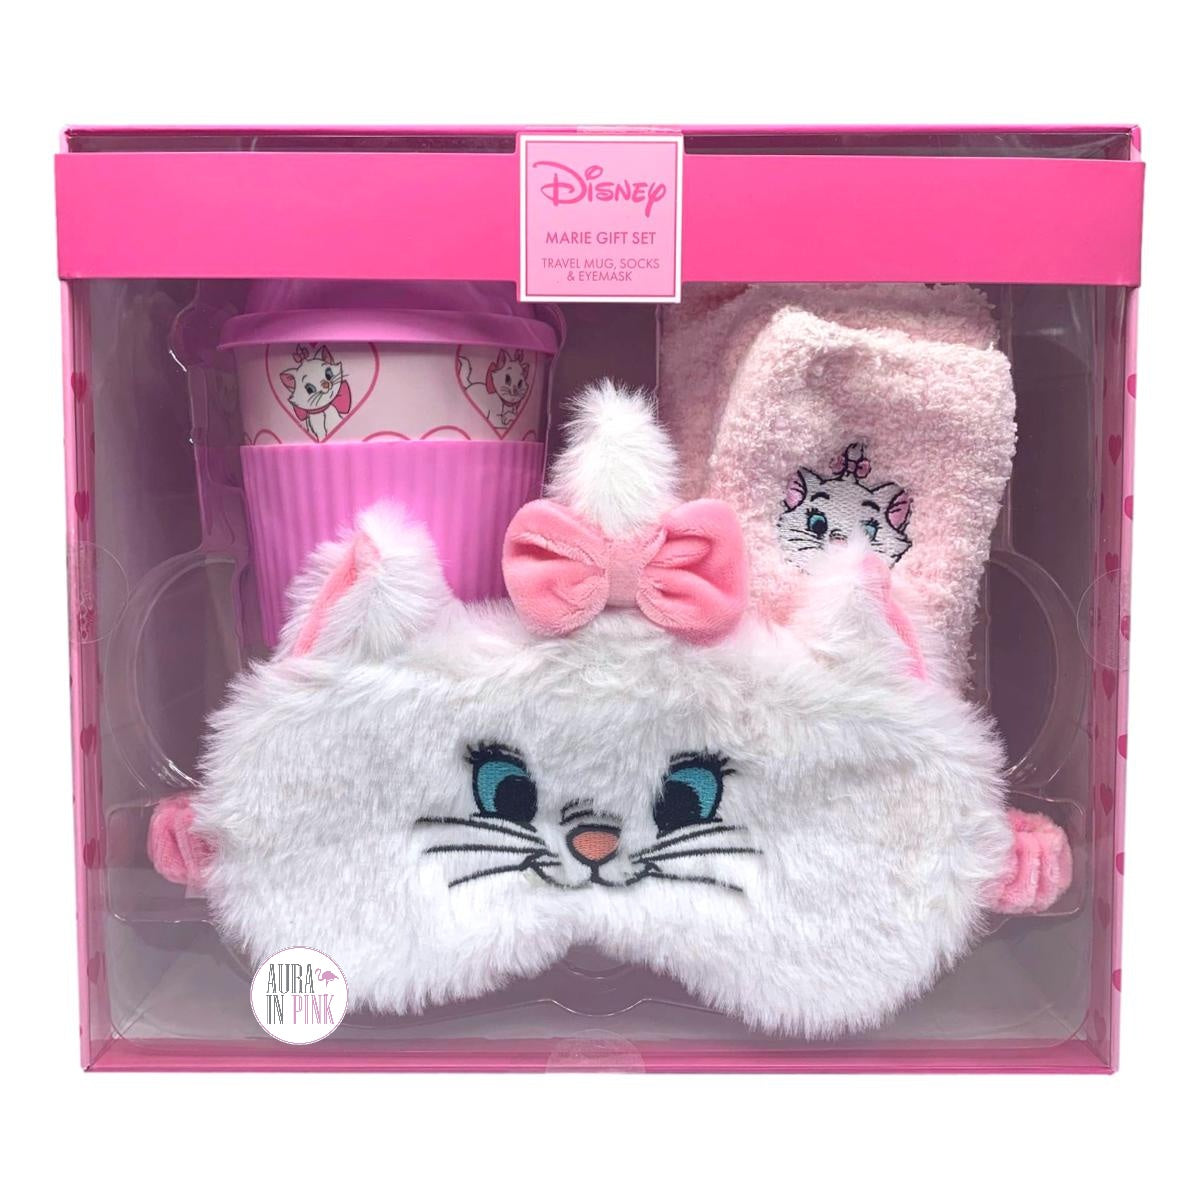 Disney The Aristocats Marie Travel Mug, Socks Sleep Eye Mask Gift Se – Aura In Pink Inc.